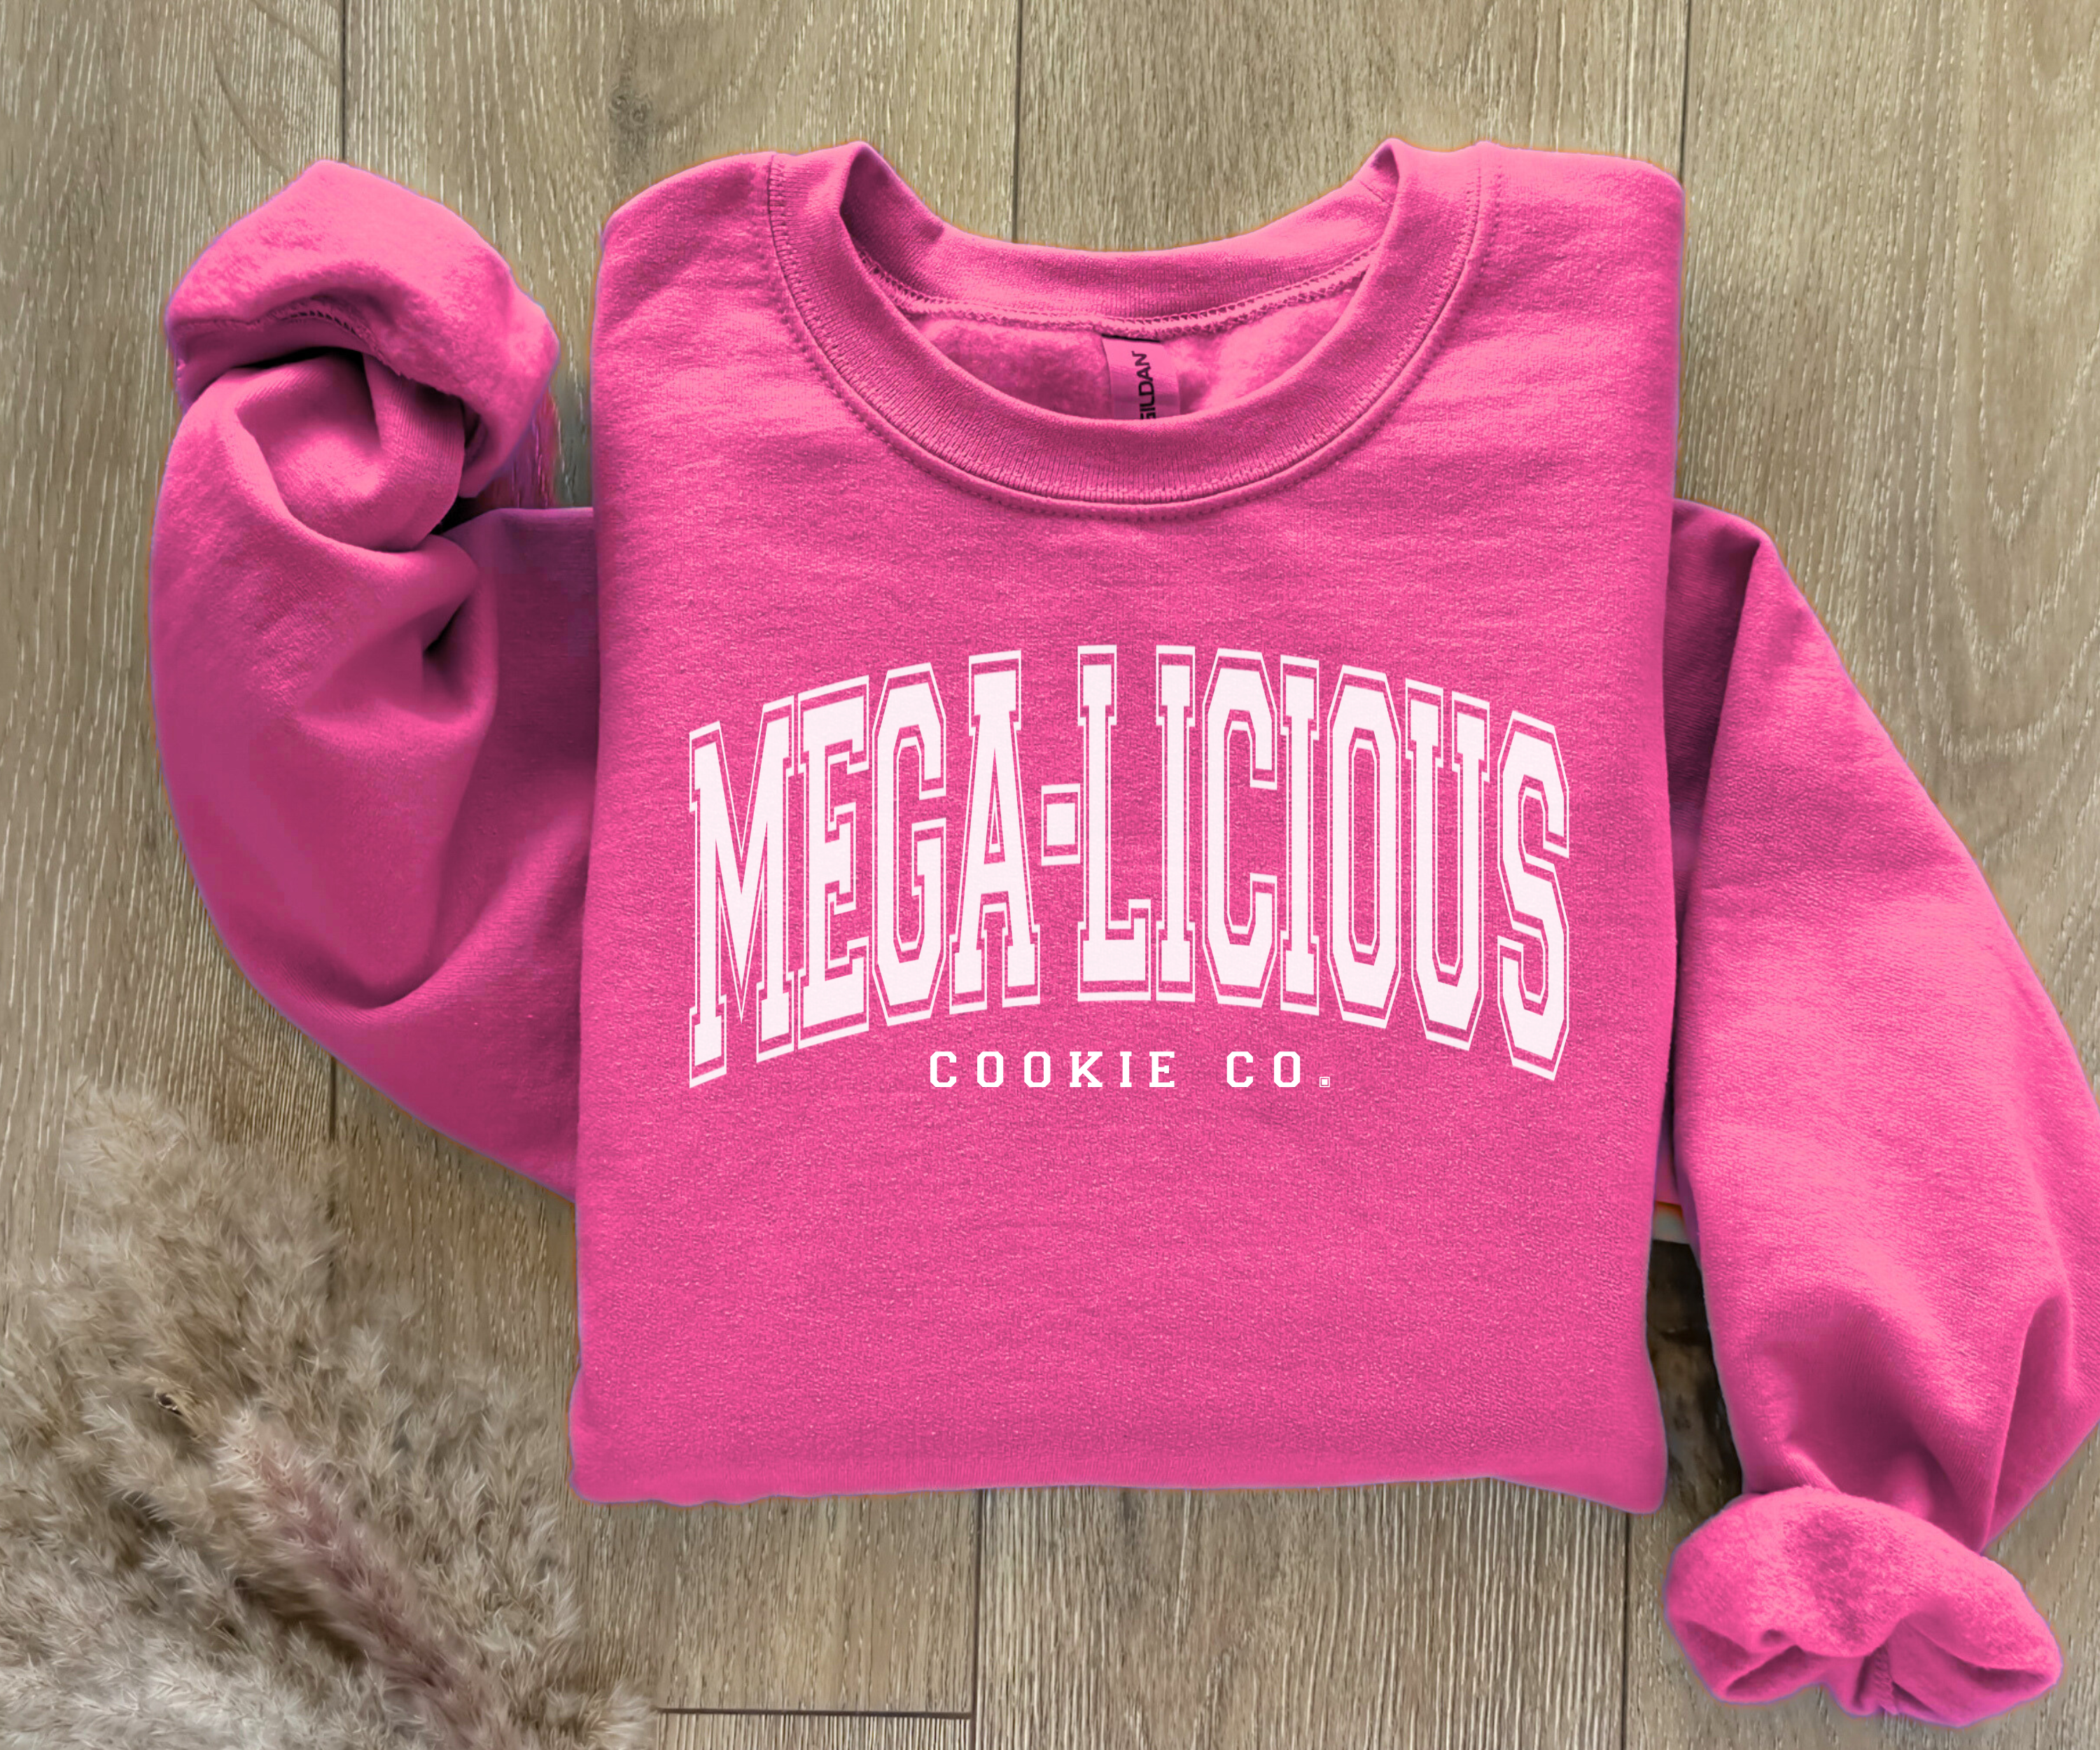 Mega-licious Cookie Co. varsity letter crewneck sweatshirt